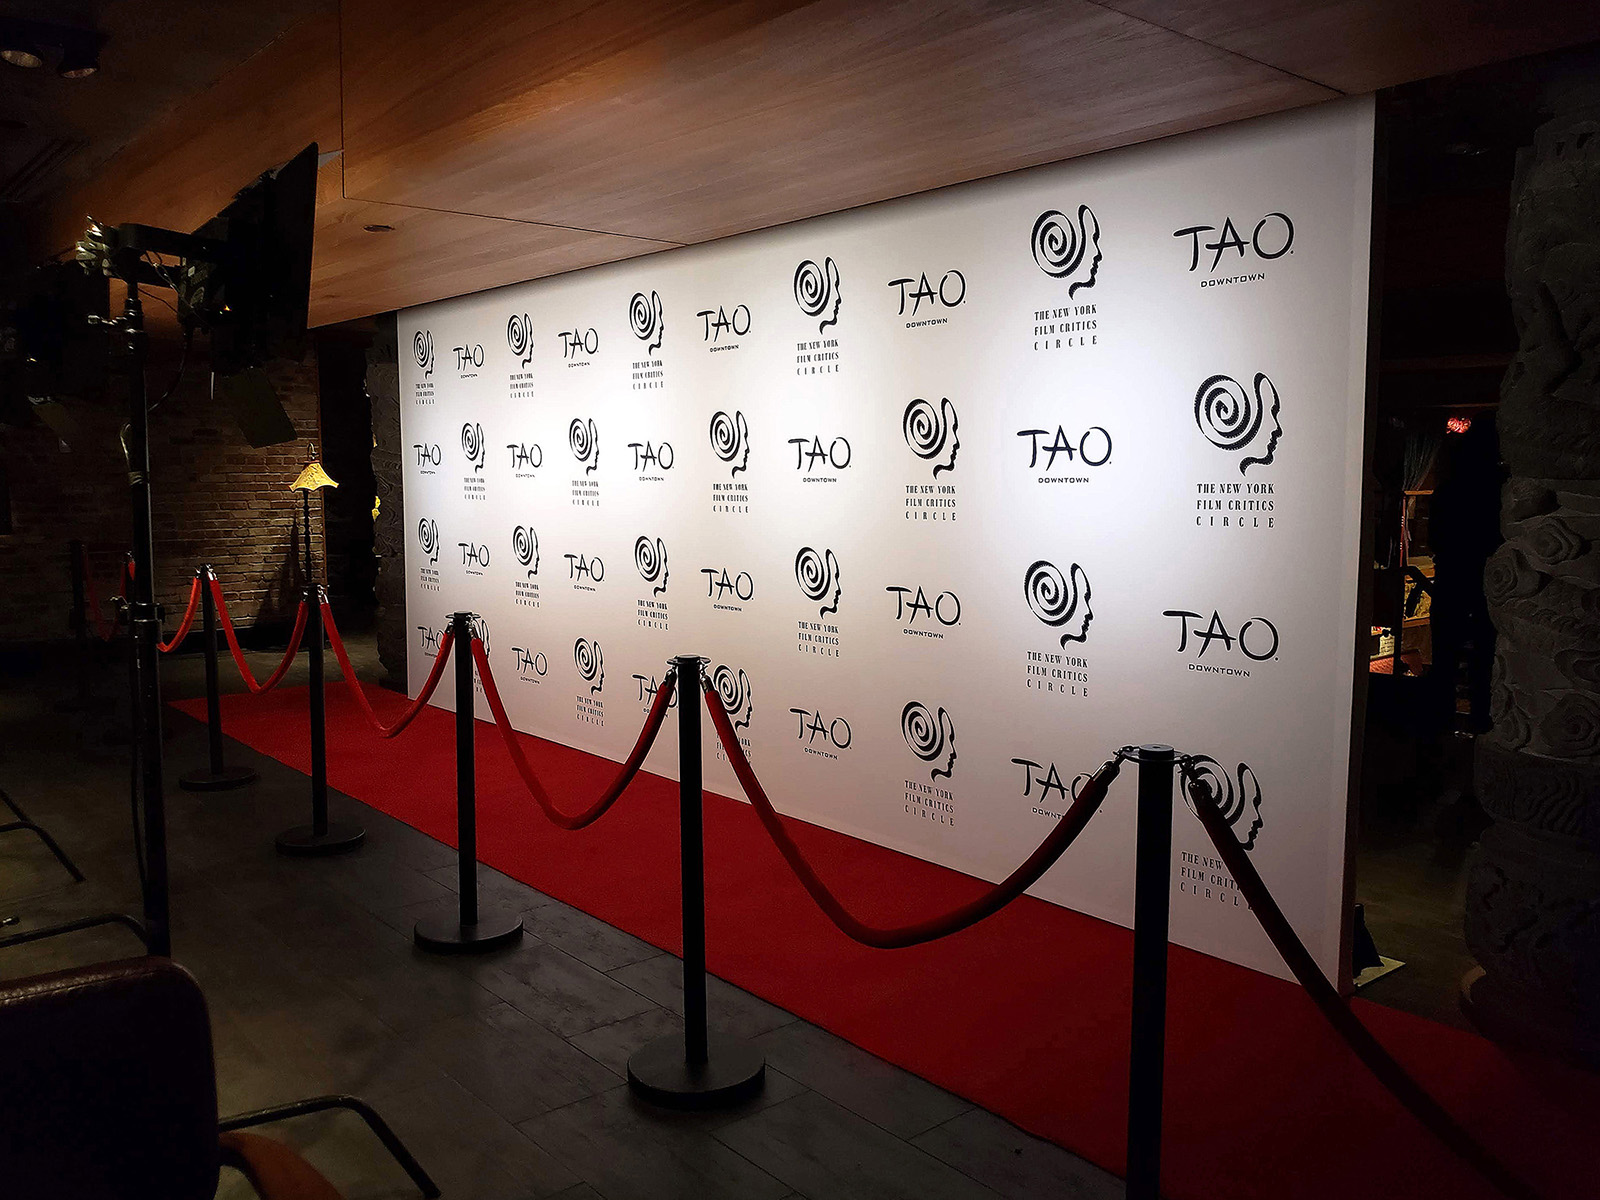 tao new york film critics circle awards red carpet backdrop step and repeat